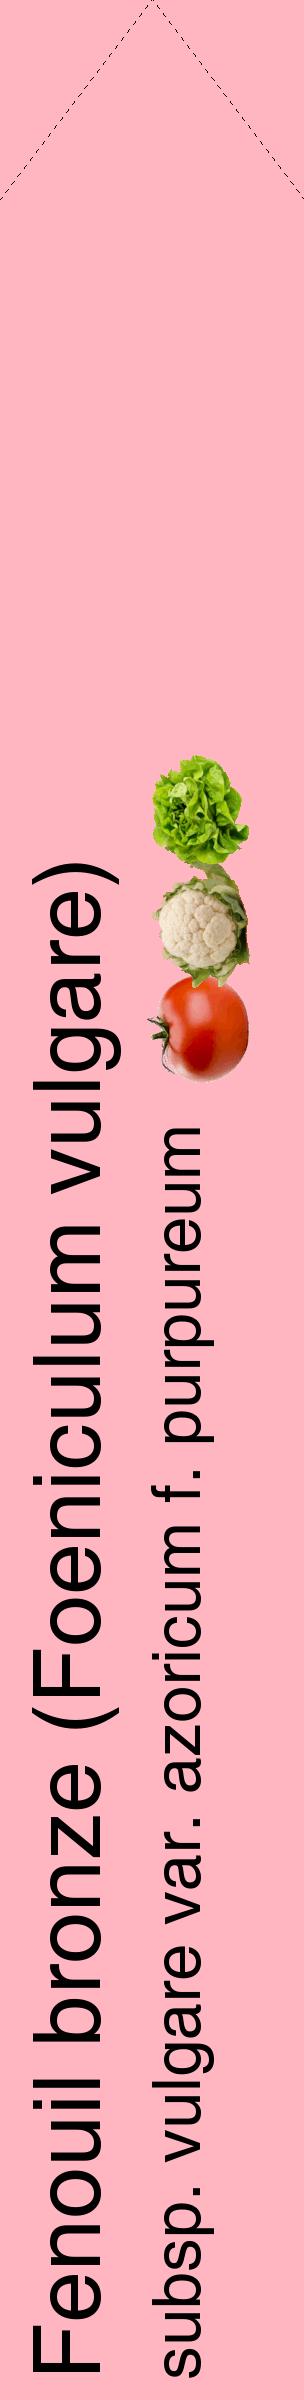 Étiquette de : Foeniculum vulgare subsp. vulgare var. azoricum f. purpureum - format c - style noire41_simplehel avec comestibilité simplifiée